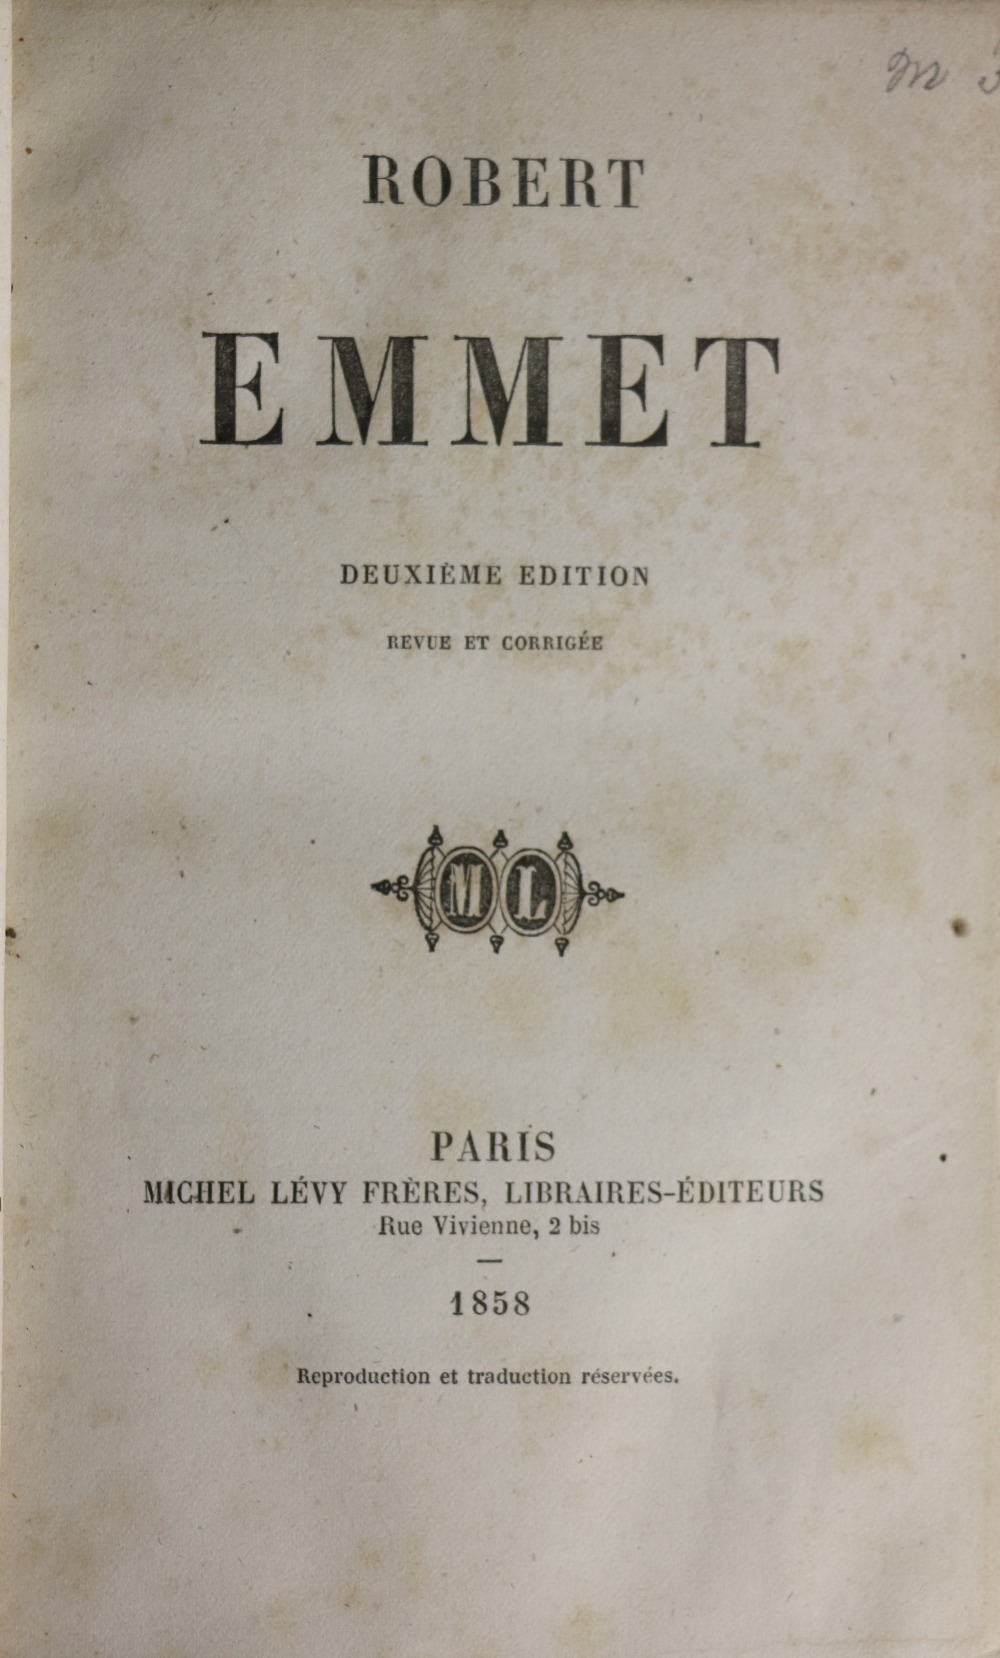 Anon: Robert Emmet, 12mo Paris (Michel Levy Freres) 1858. Second Edn., Revue et Corrigee. Hf.